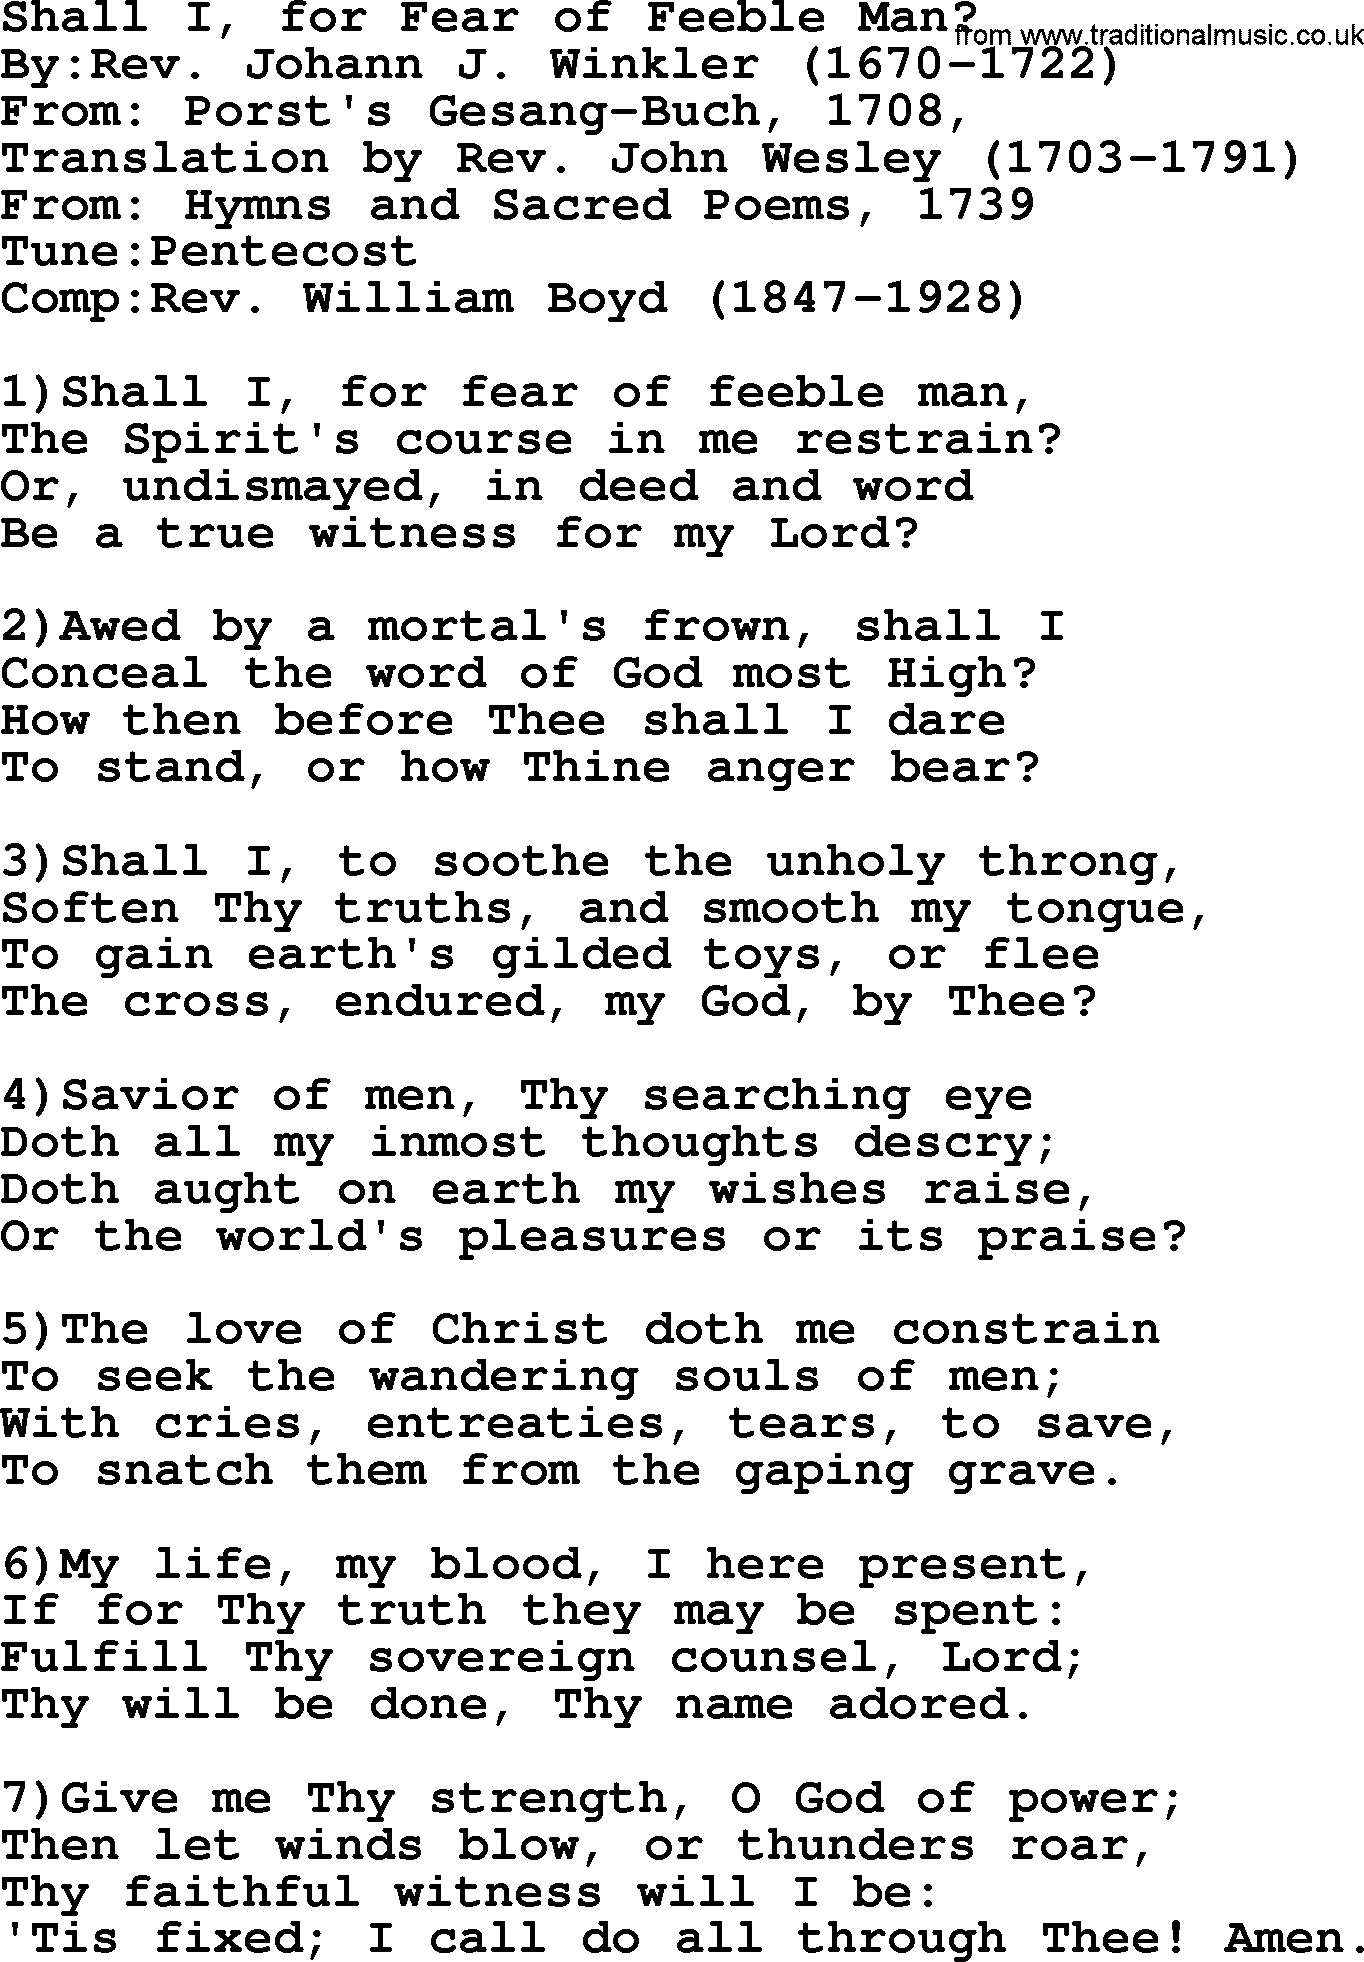 Methodist Hymn: Shall I, For Fear Of Feeble Man, lyrics